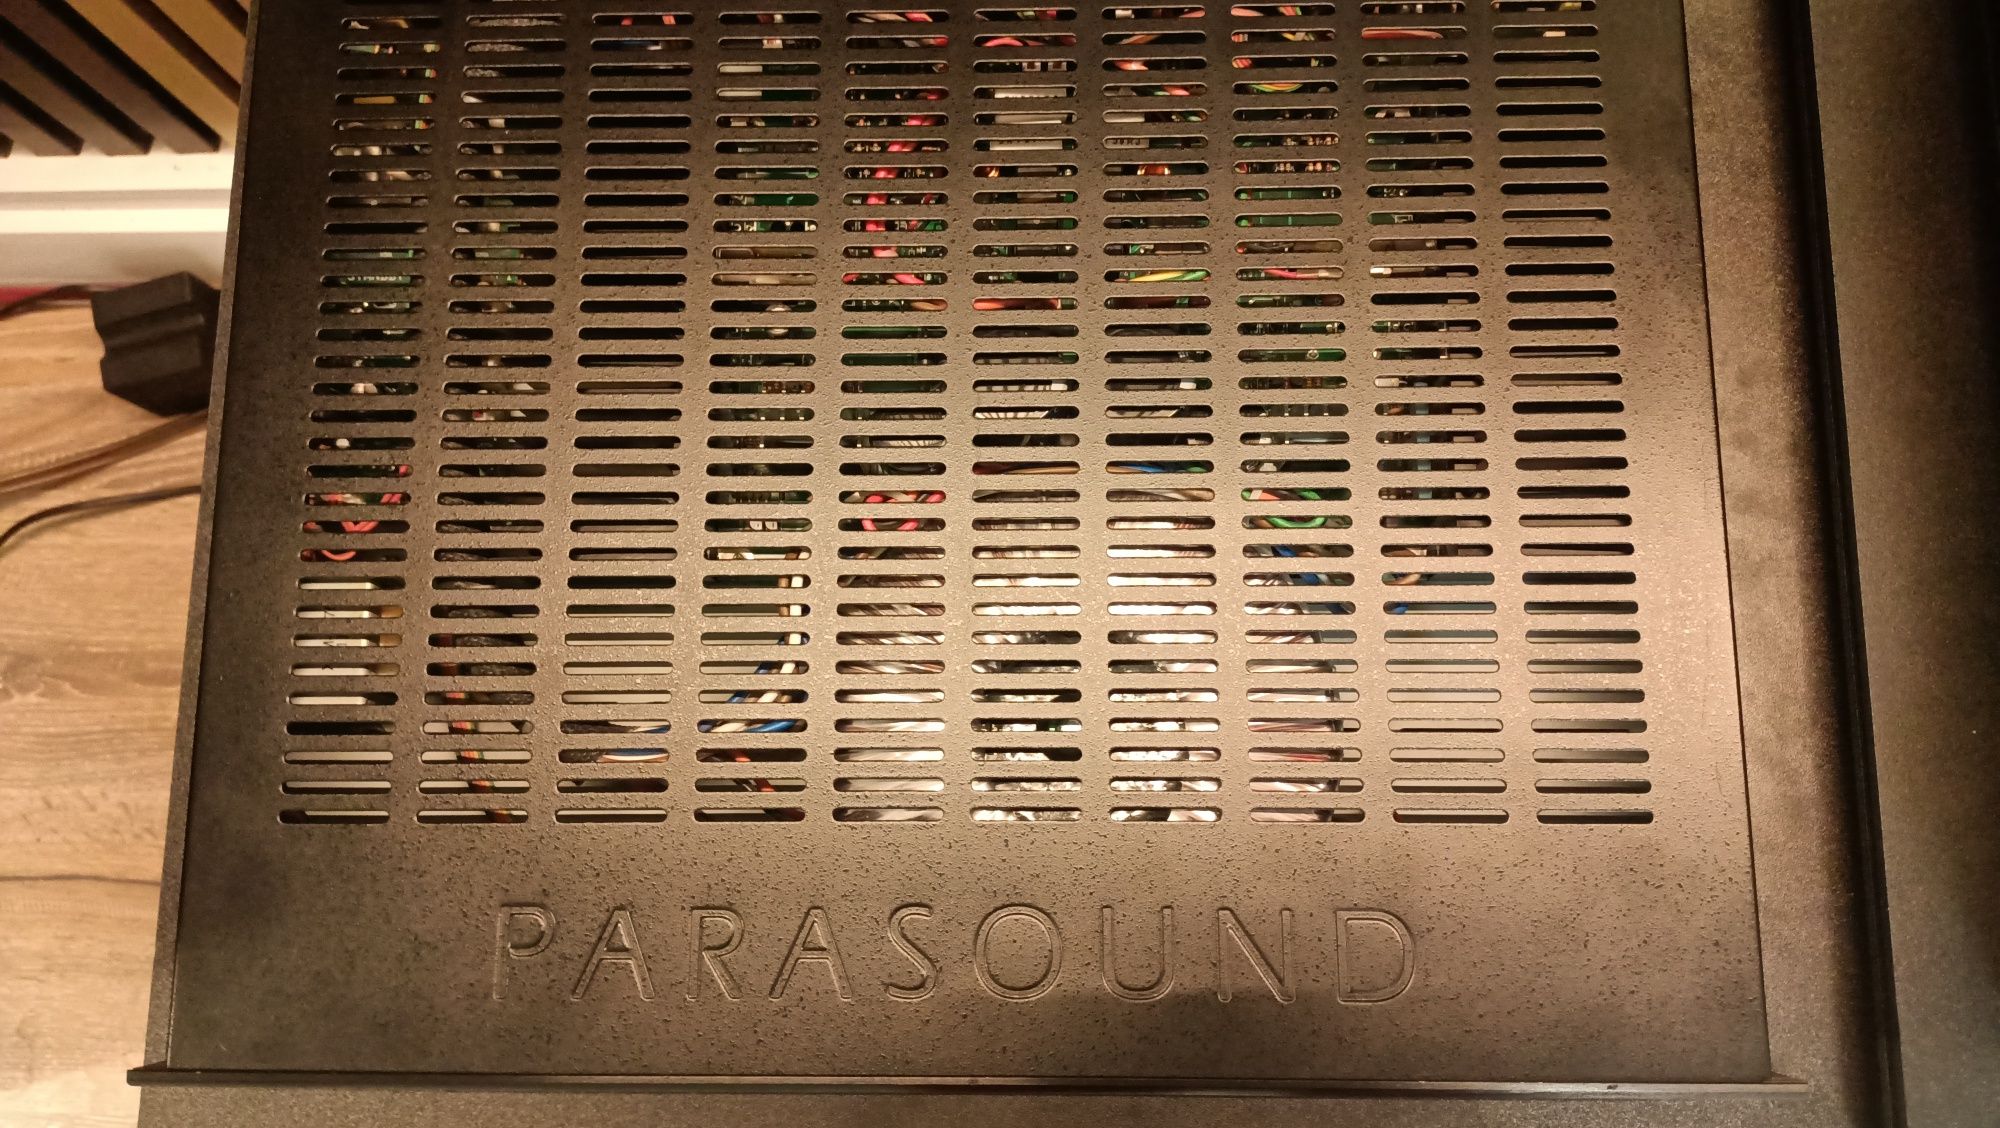 Parasound news clasic 275 końcówka USA